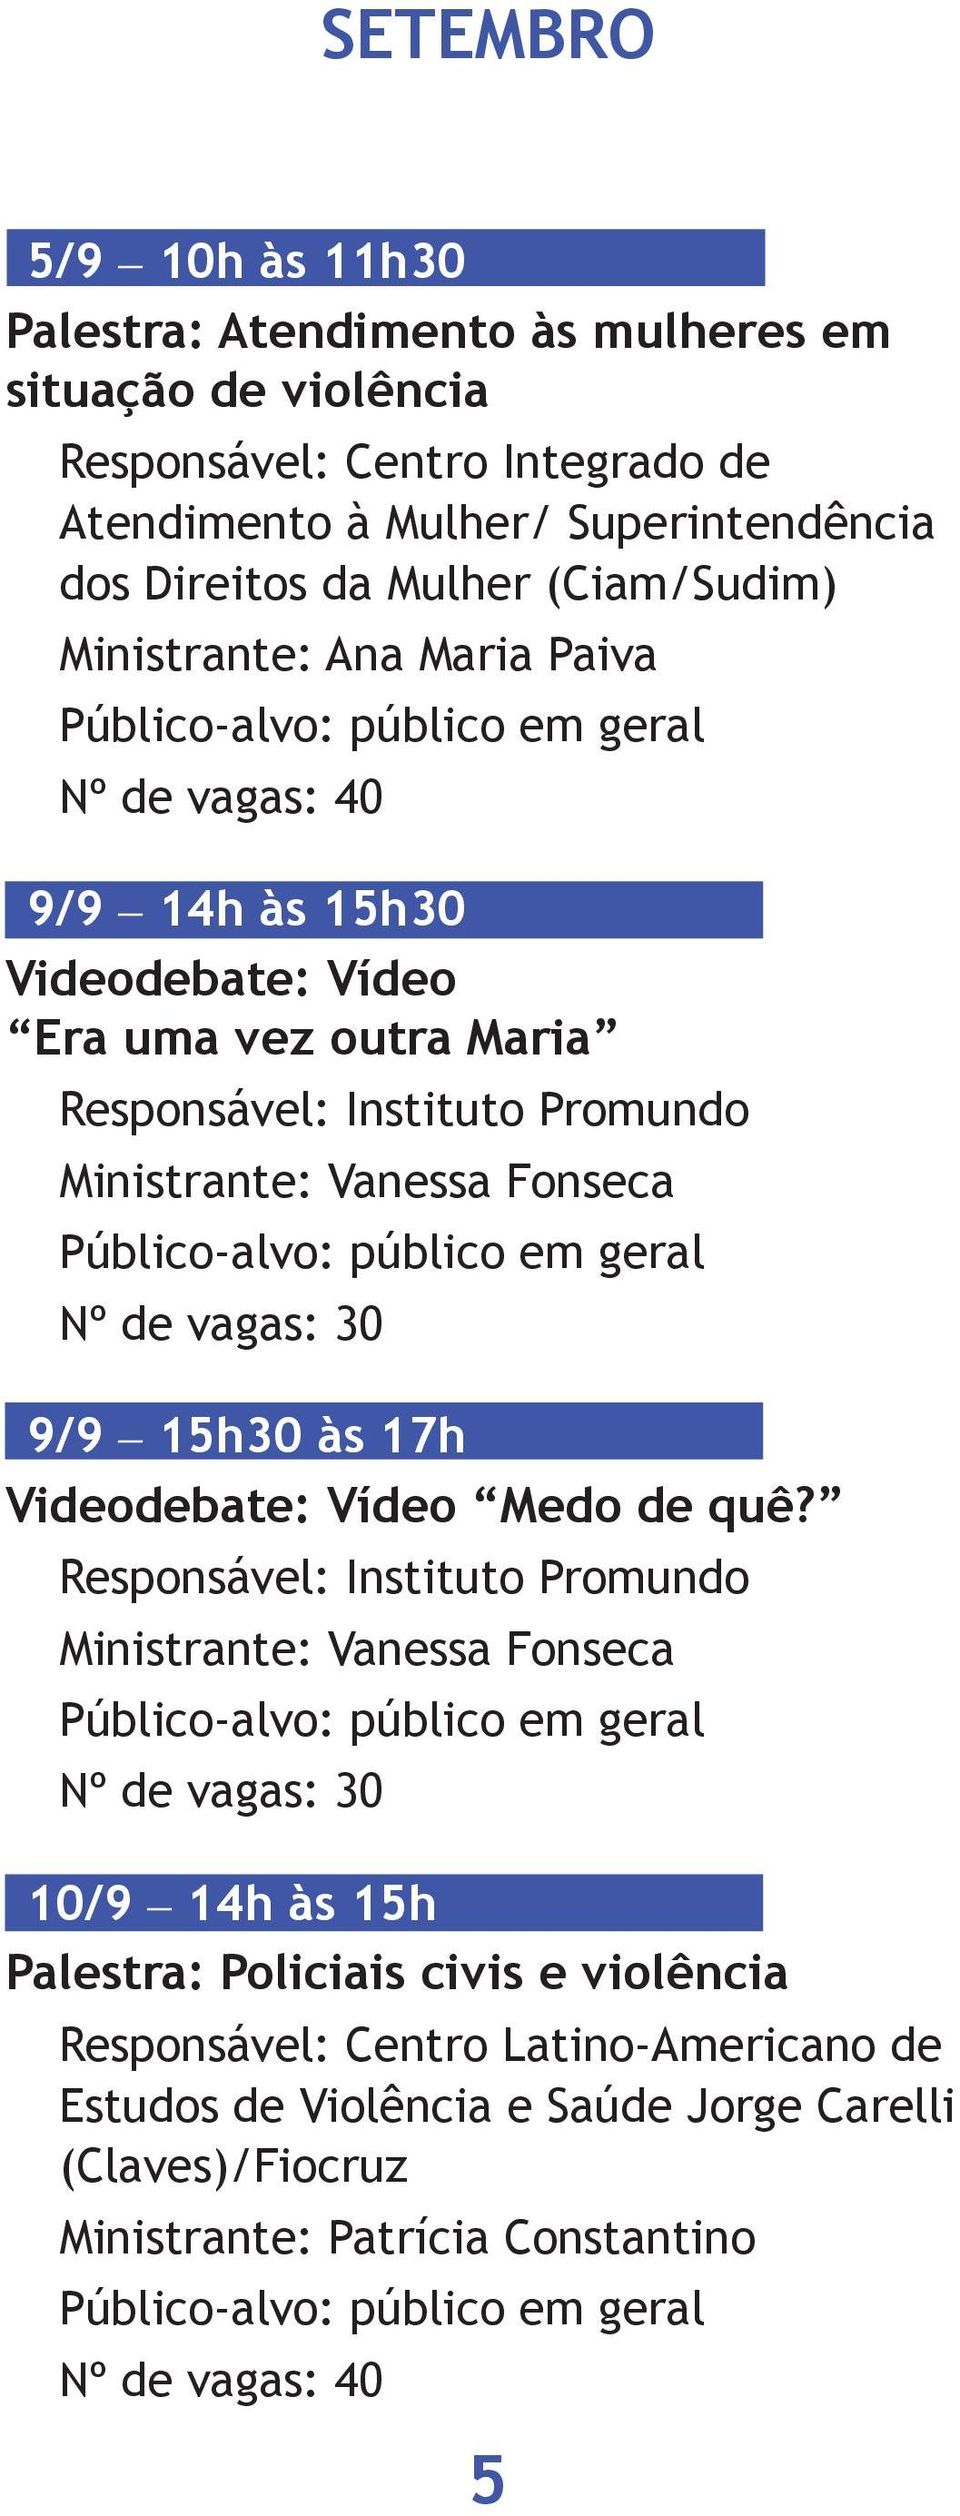 Ministrante: Vanessa Fonseca 9/9 15h30 às 17h Videodebate: Vídeo Medo de quê?